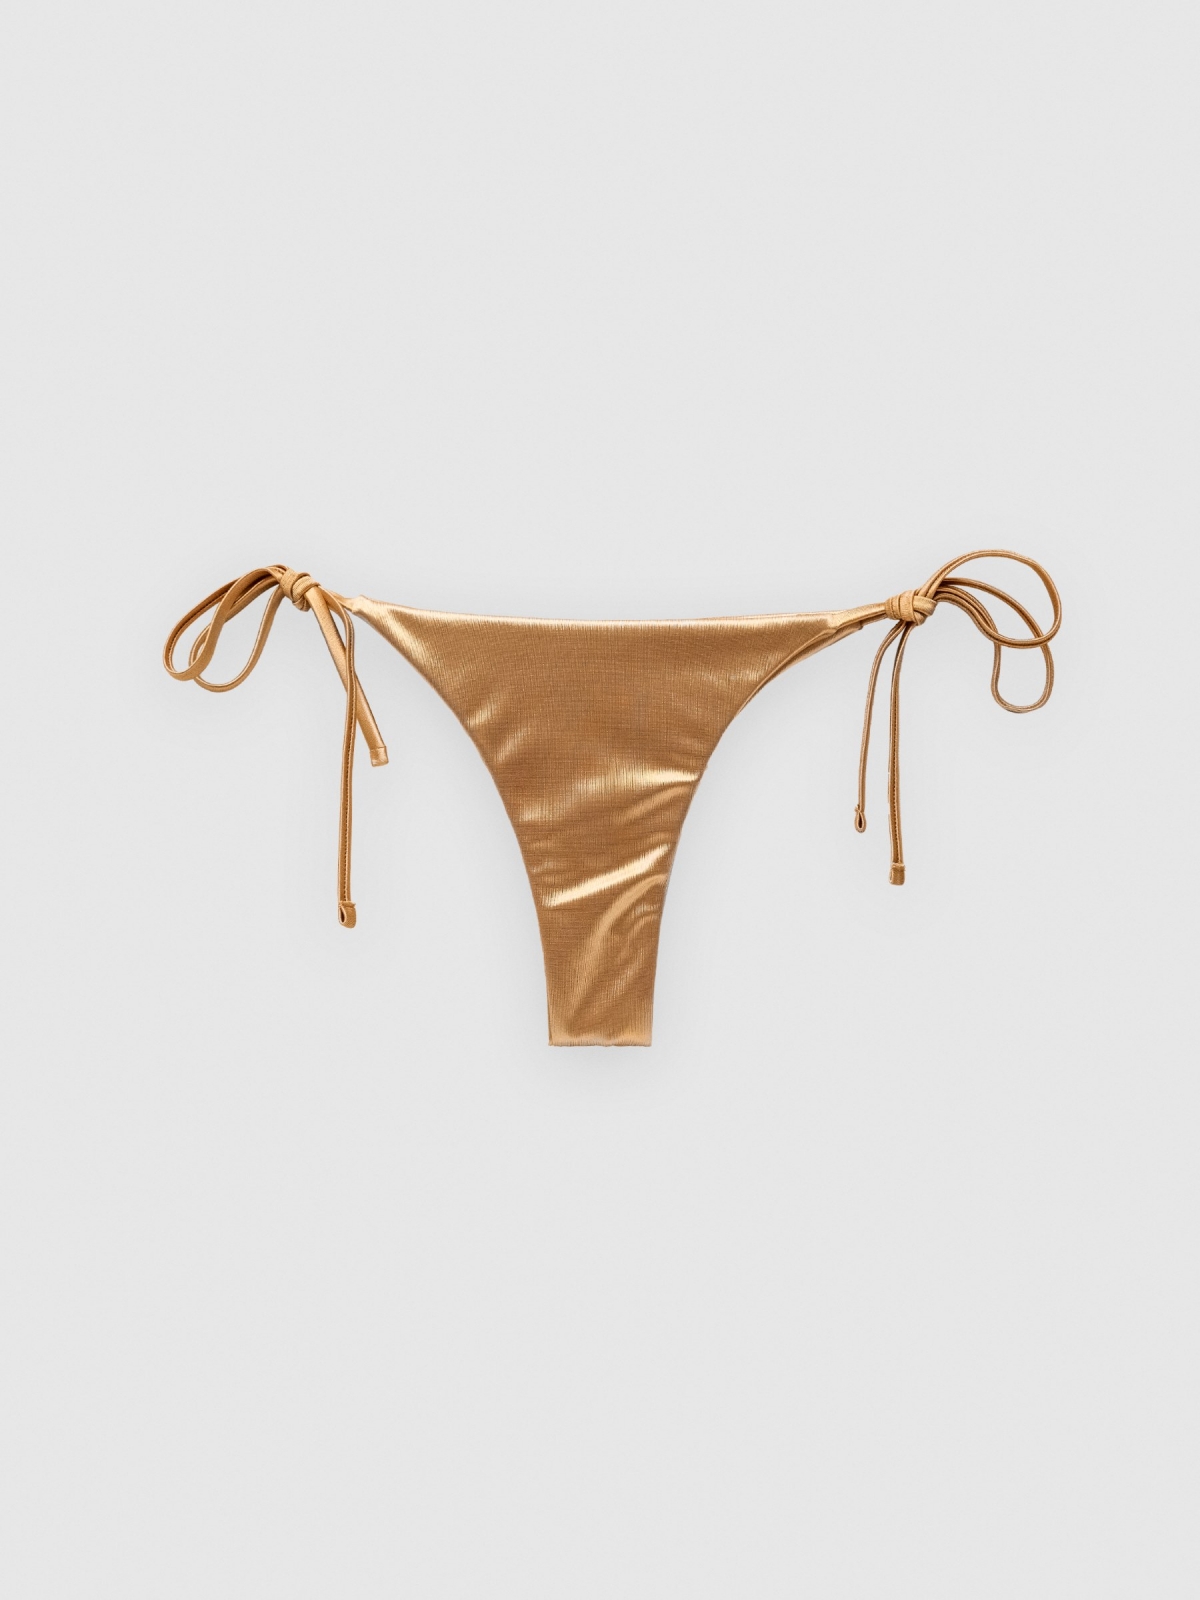  Metallic bikini bottoms golden